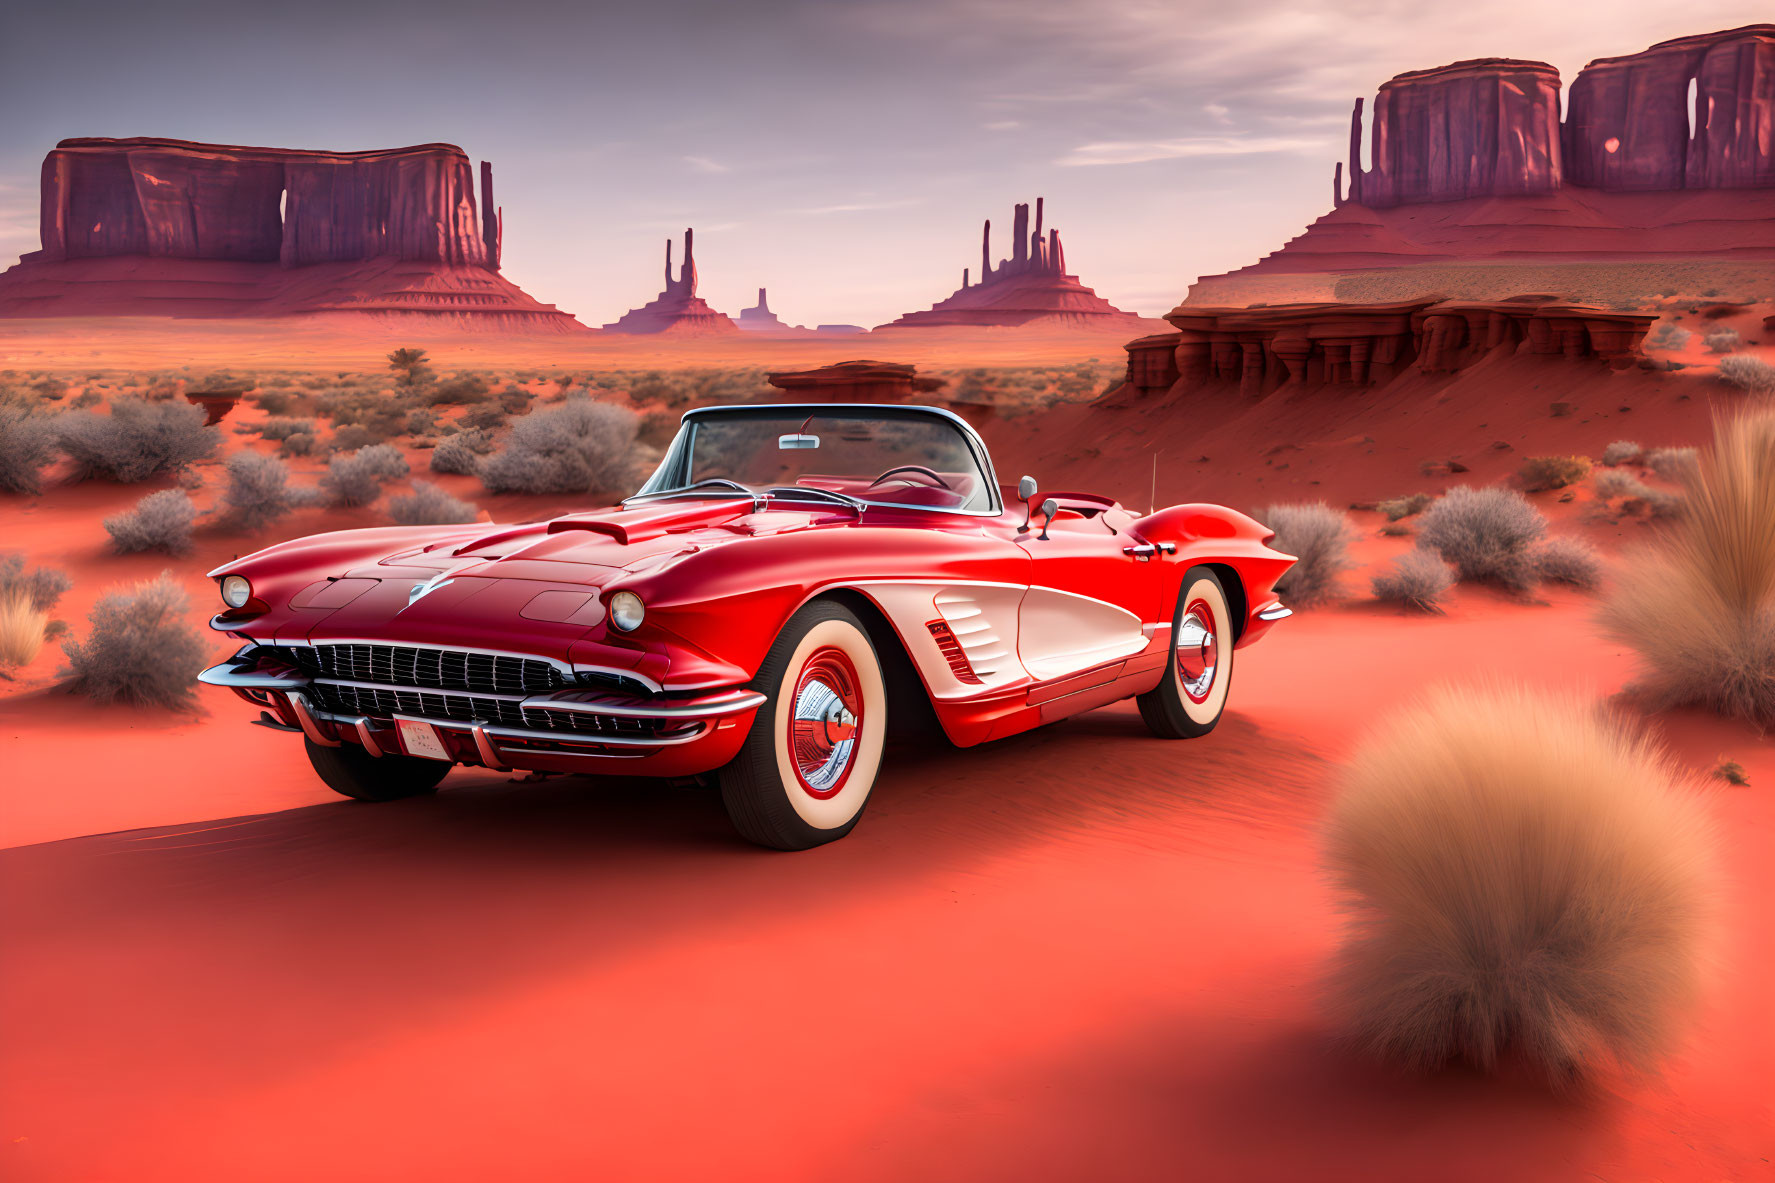 Corvette 1962 in Monument Valley